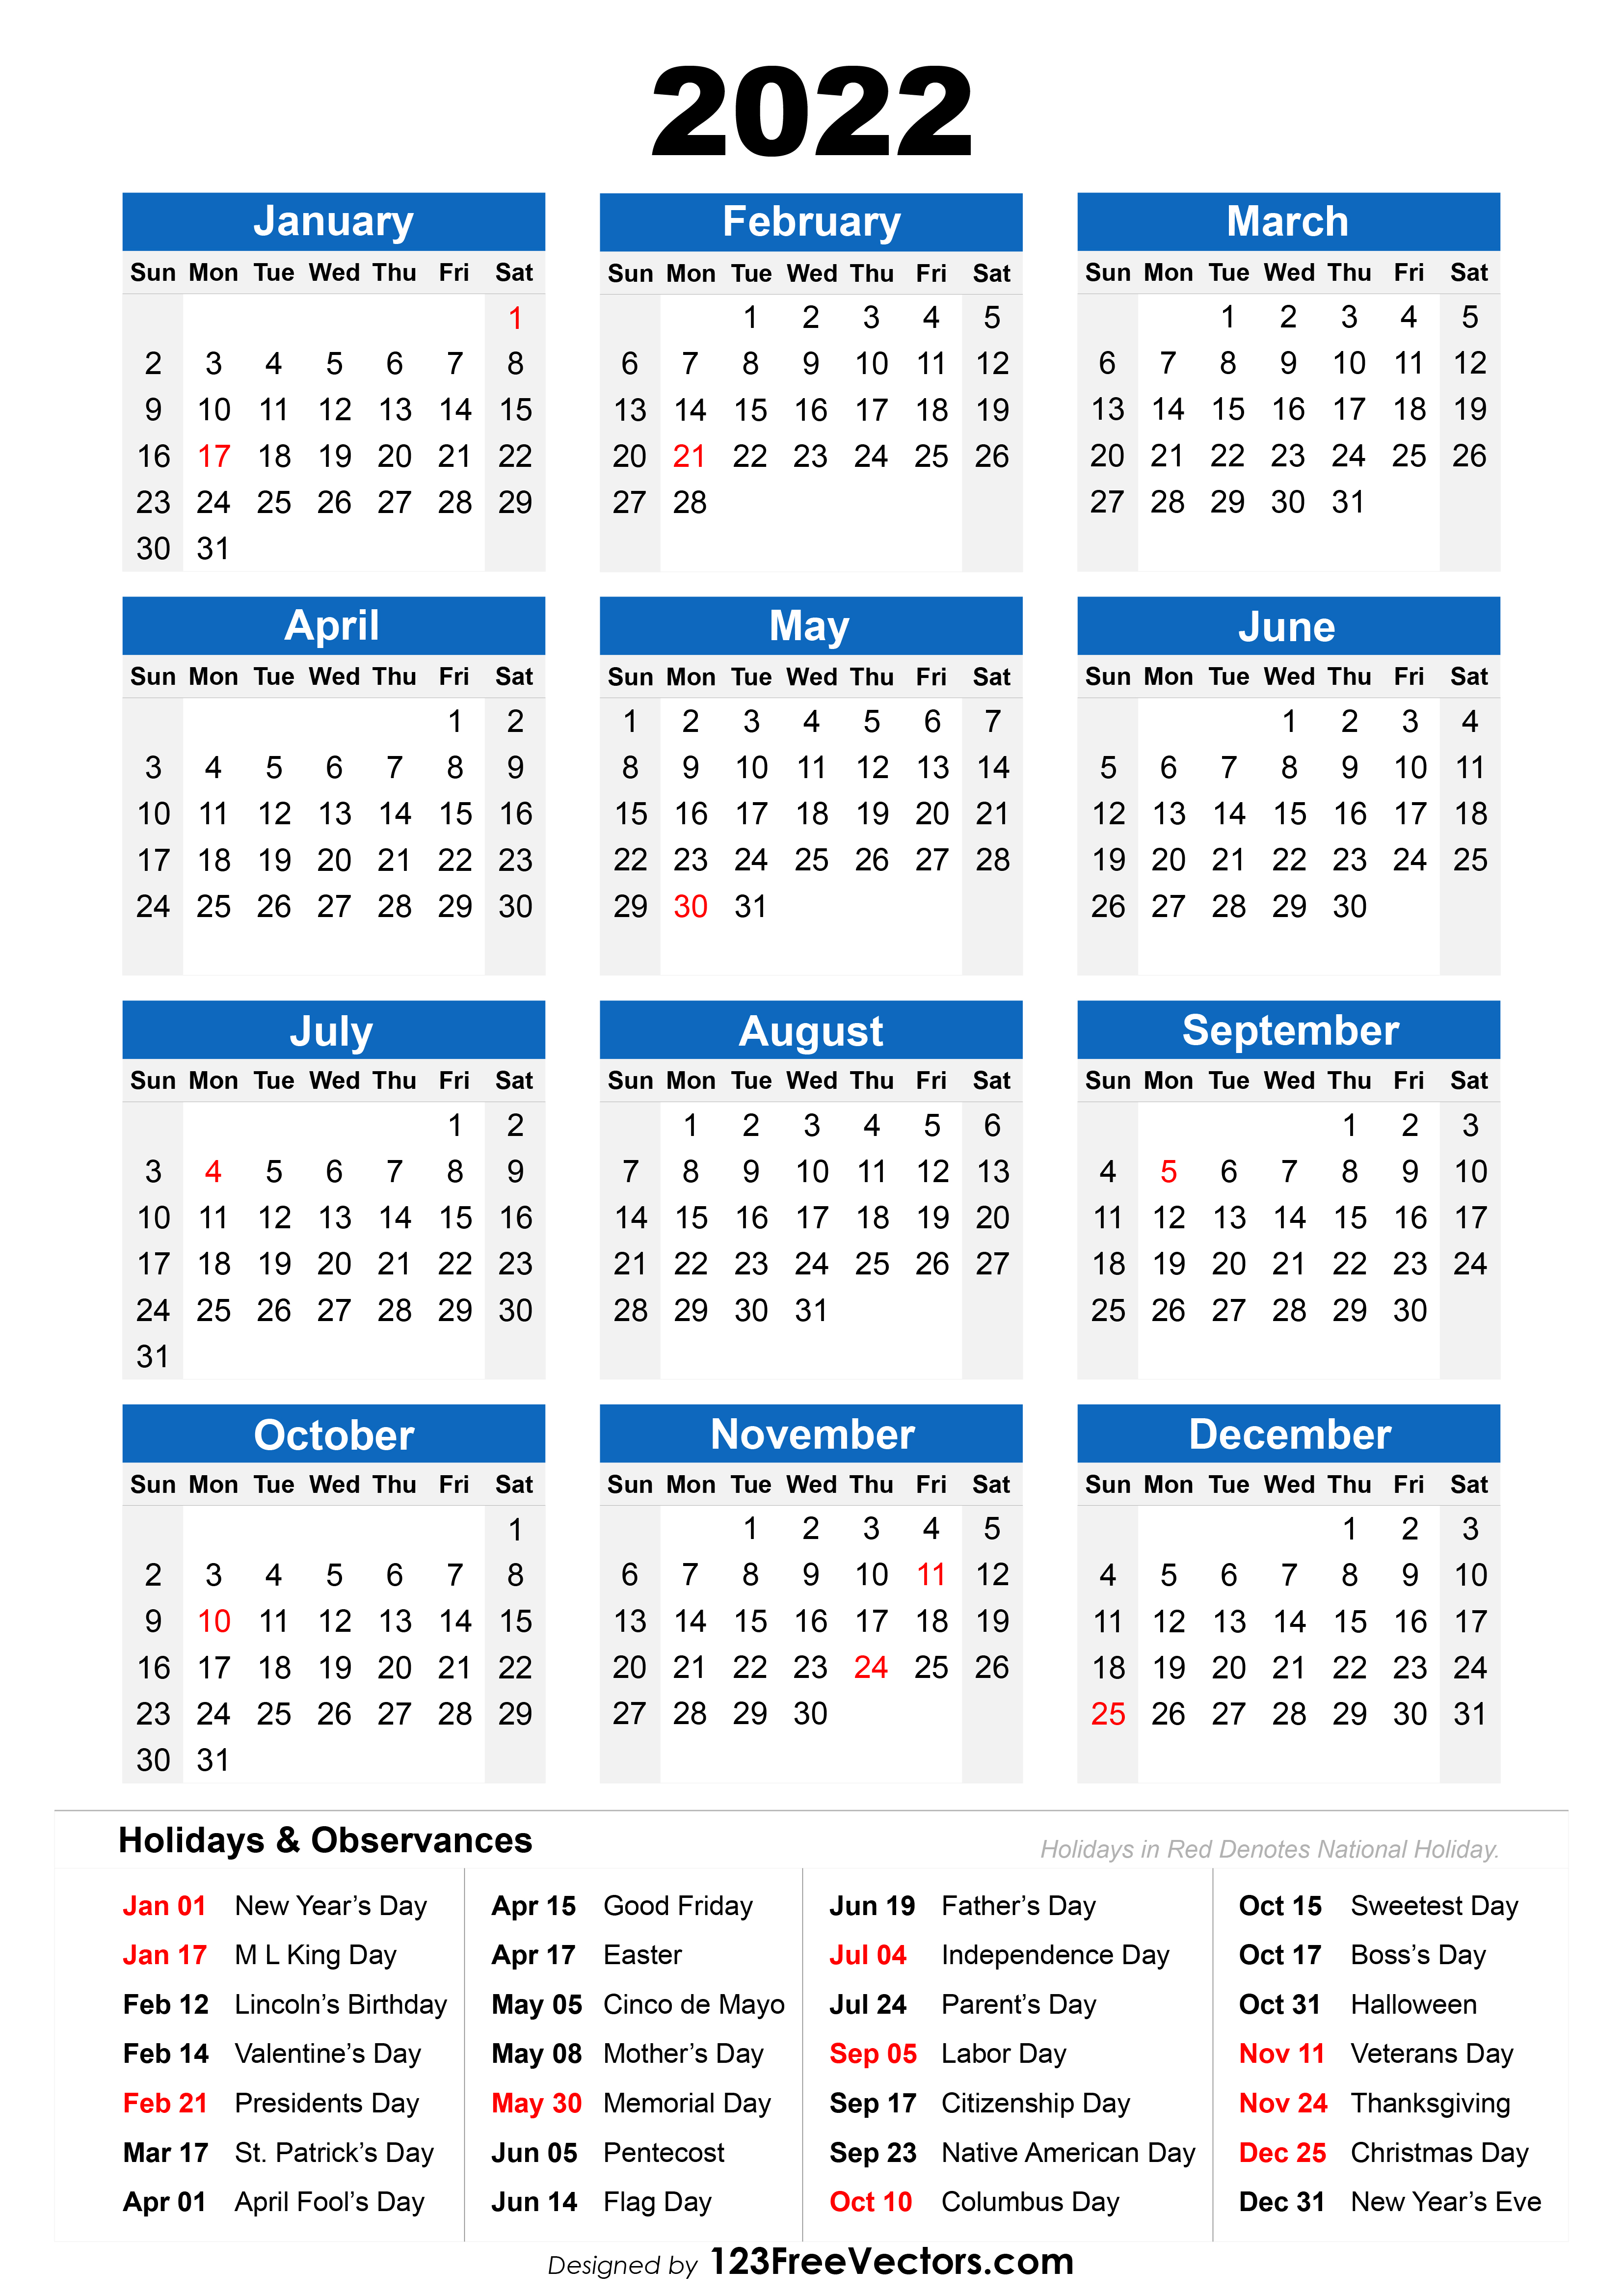 Free 2022 Calendar With Holidays Free 2022 Holiday Calendar